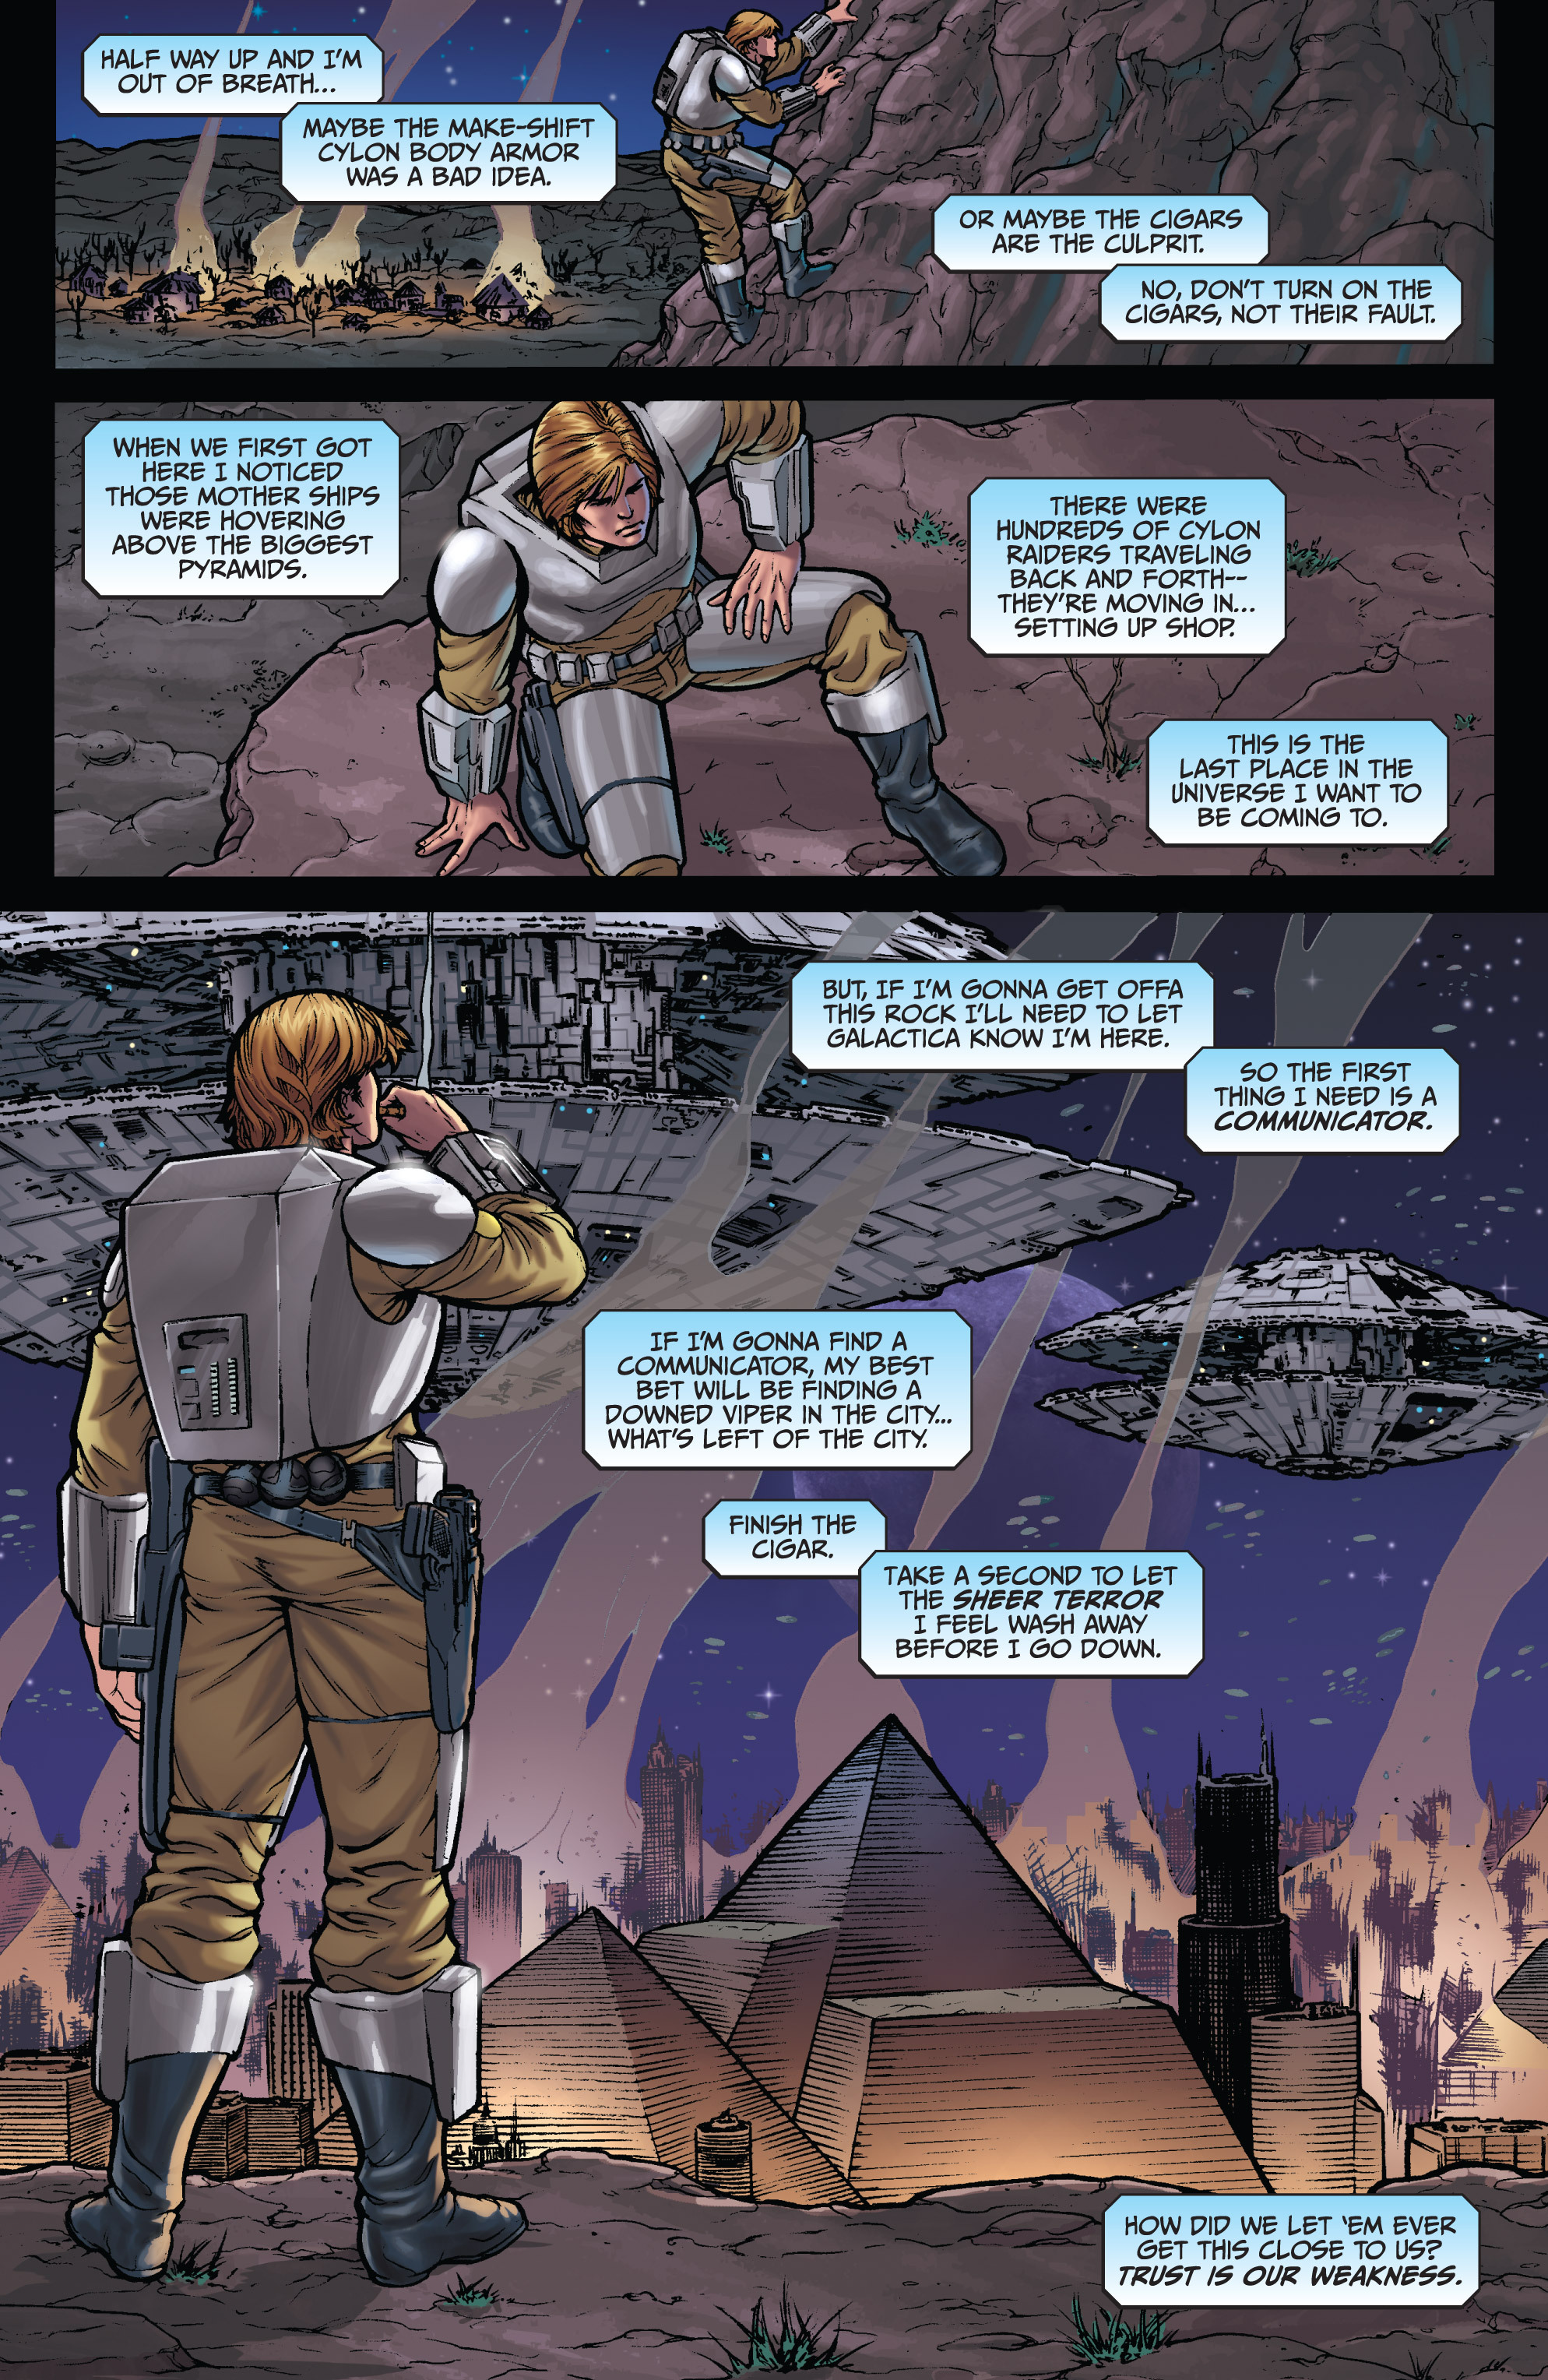 Classic Battlestar Galactica (2006) 1 Page 19